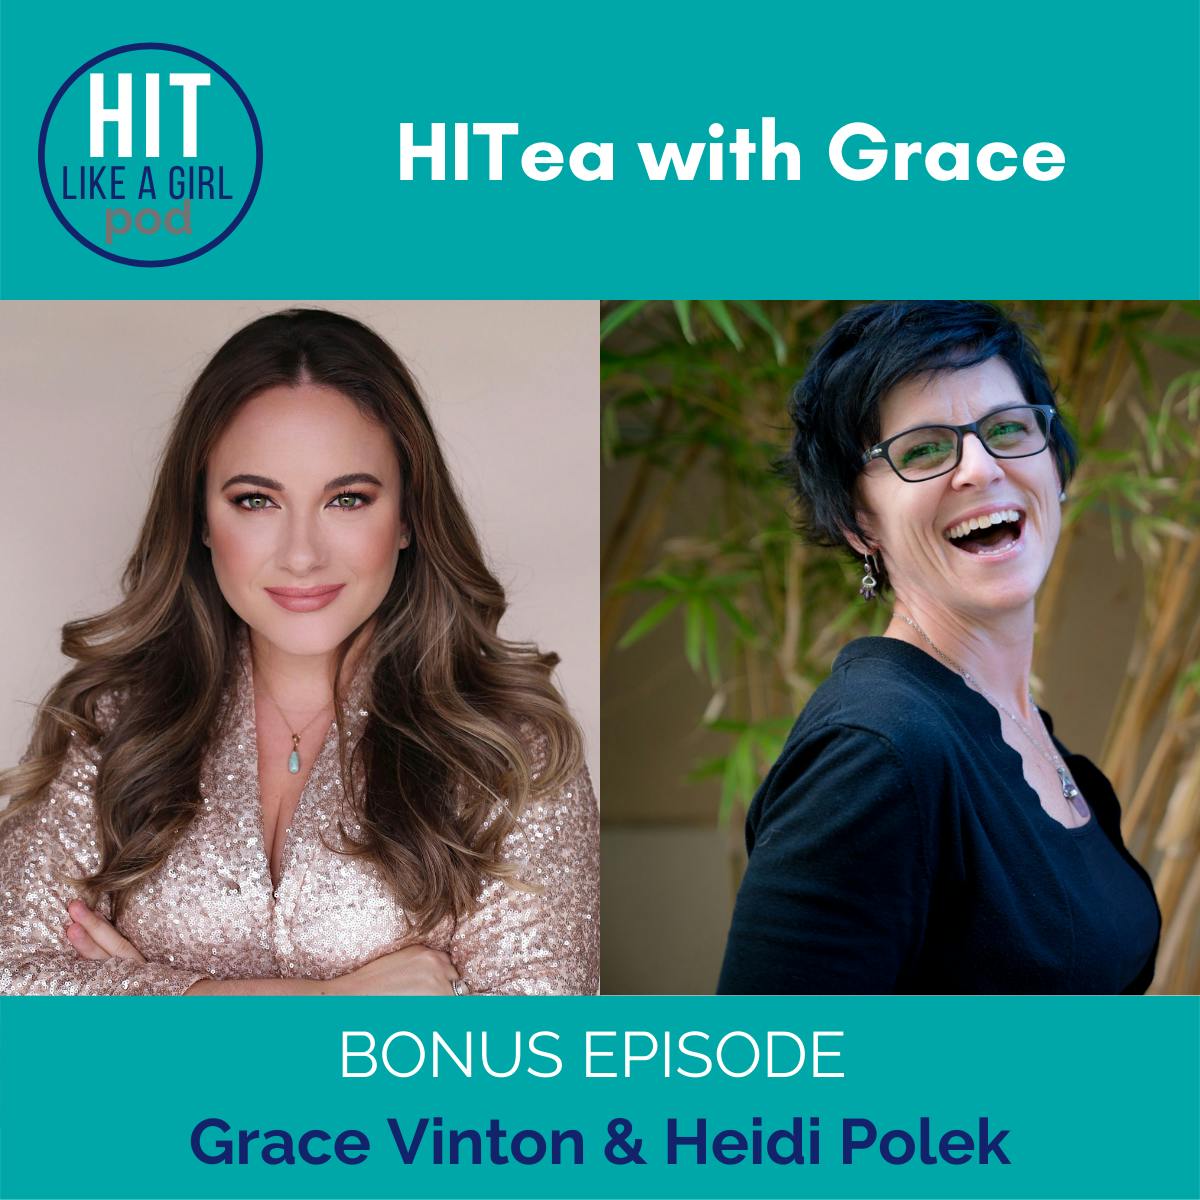 HITea with Grace: Grace Vinton interviews Heidi Polek